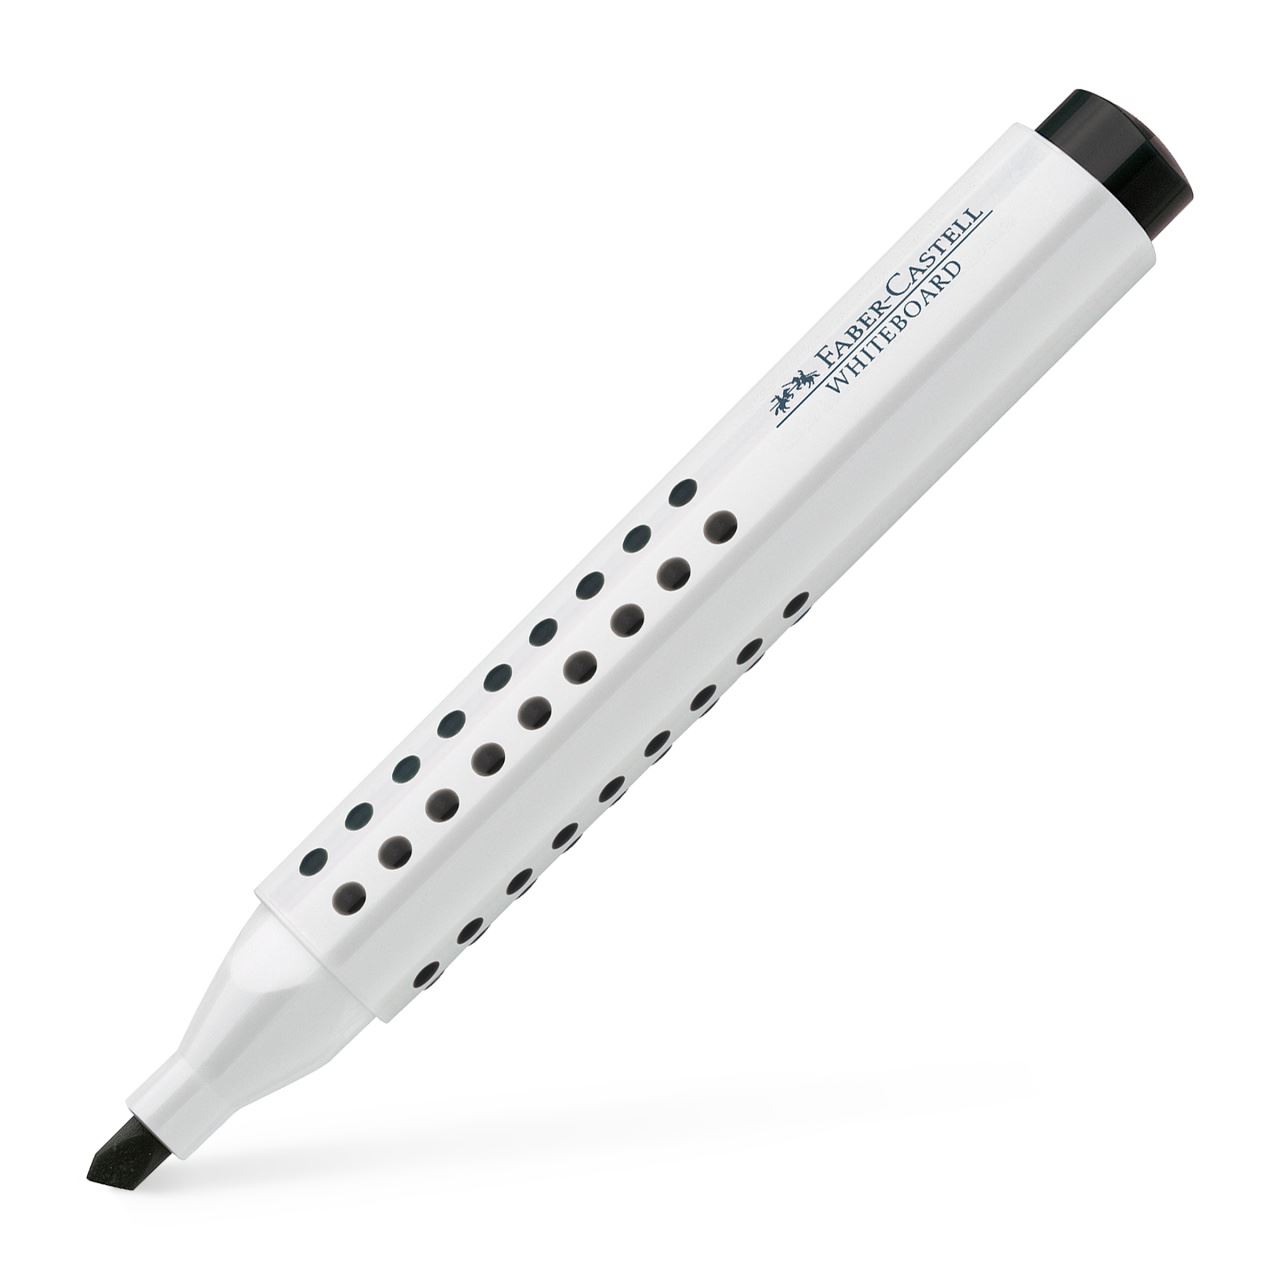 Faber-Castell - Grip Marker Whiteboard, chisel tip, black